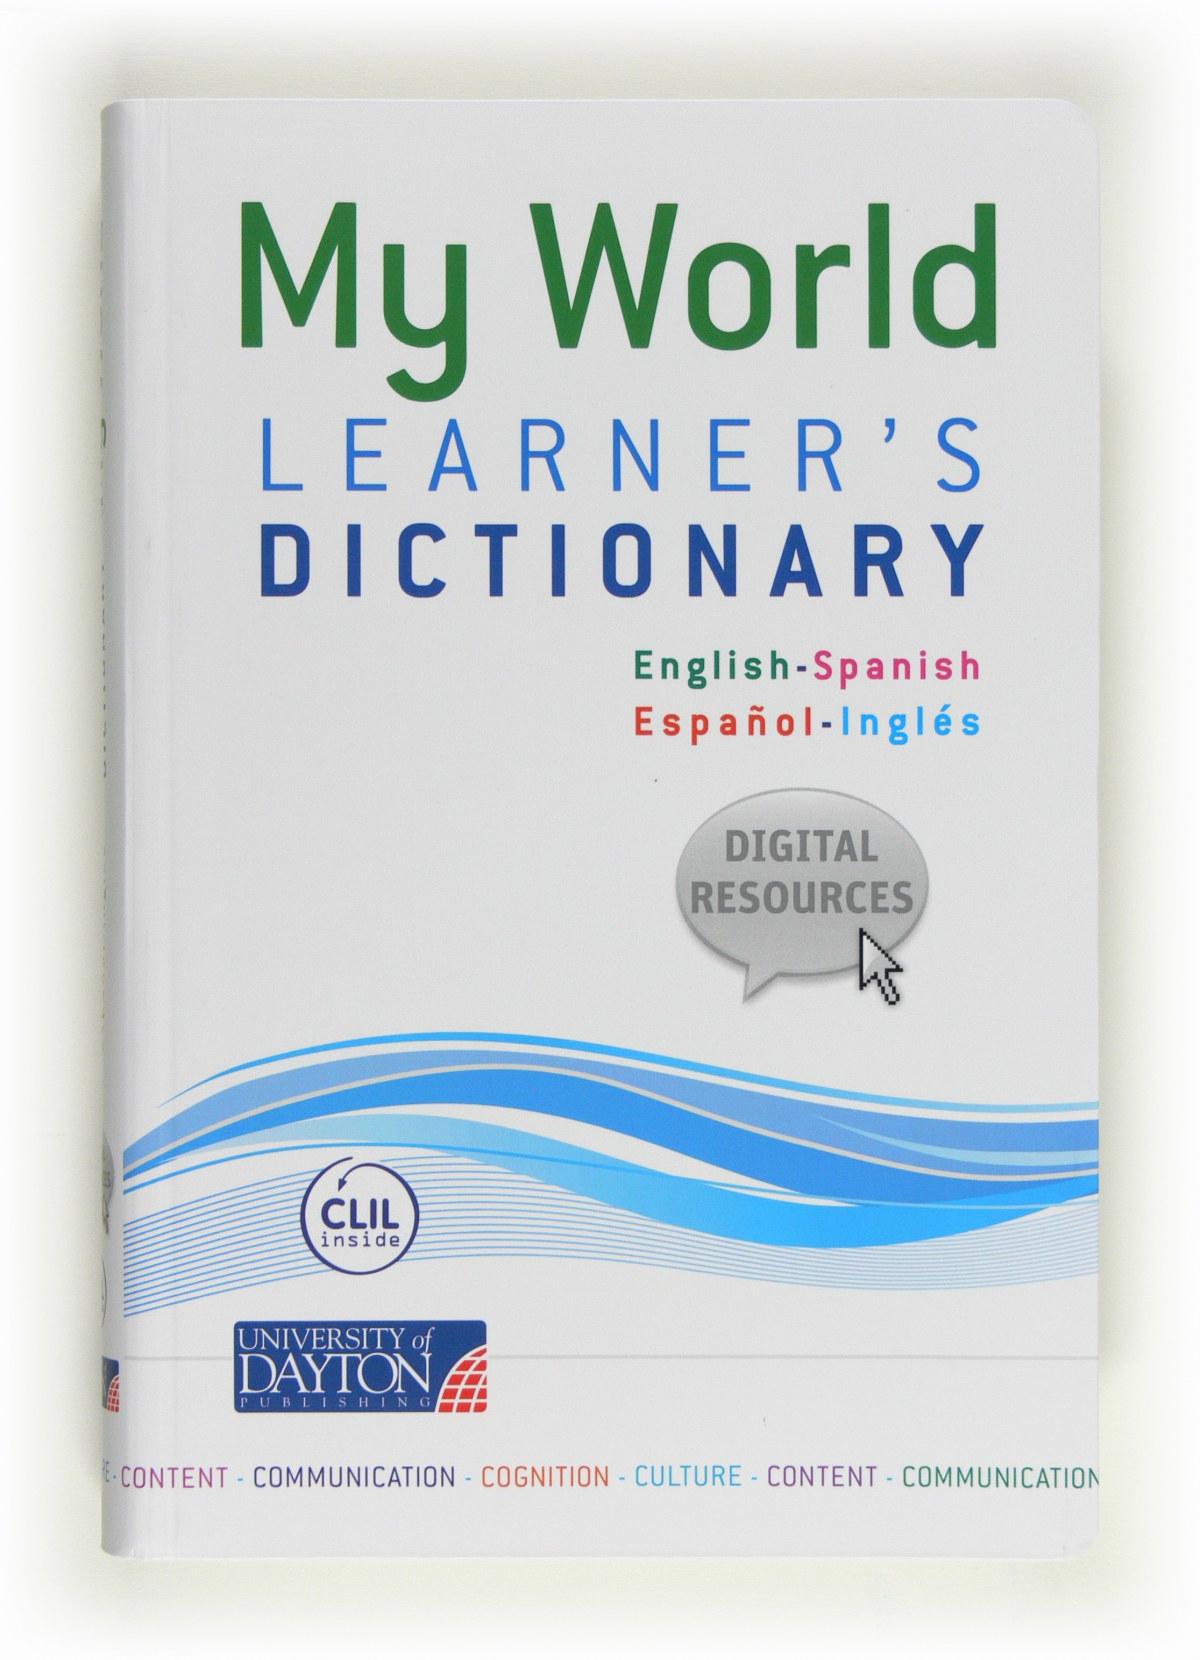 My World Learner's Dictionary - Palencia del Burgo, Ramón/Aragonés Fernández, Luis/Maguire, Bernadette